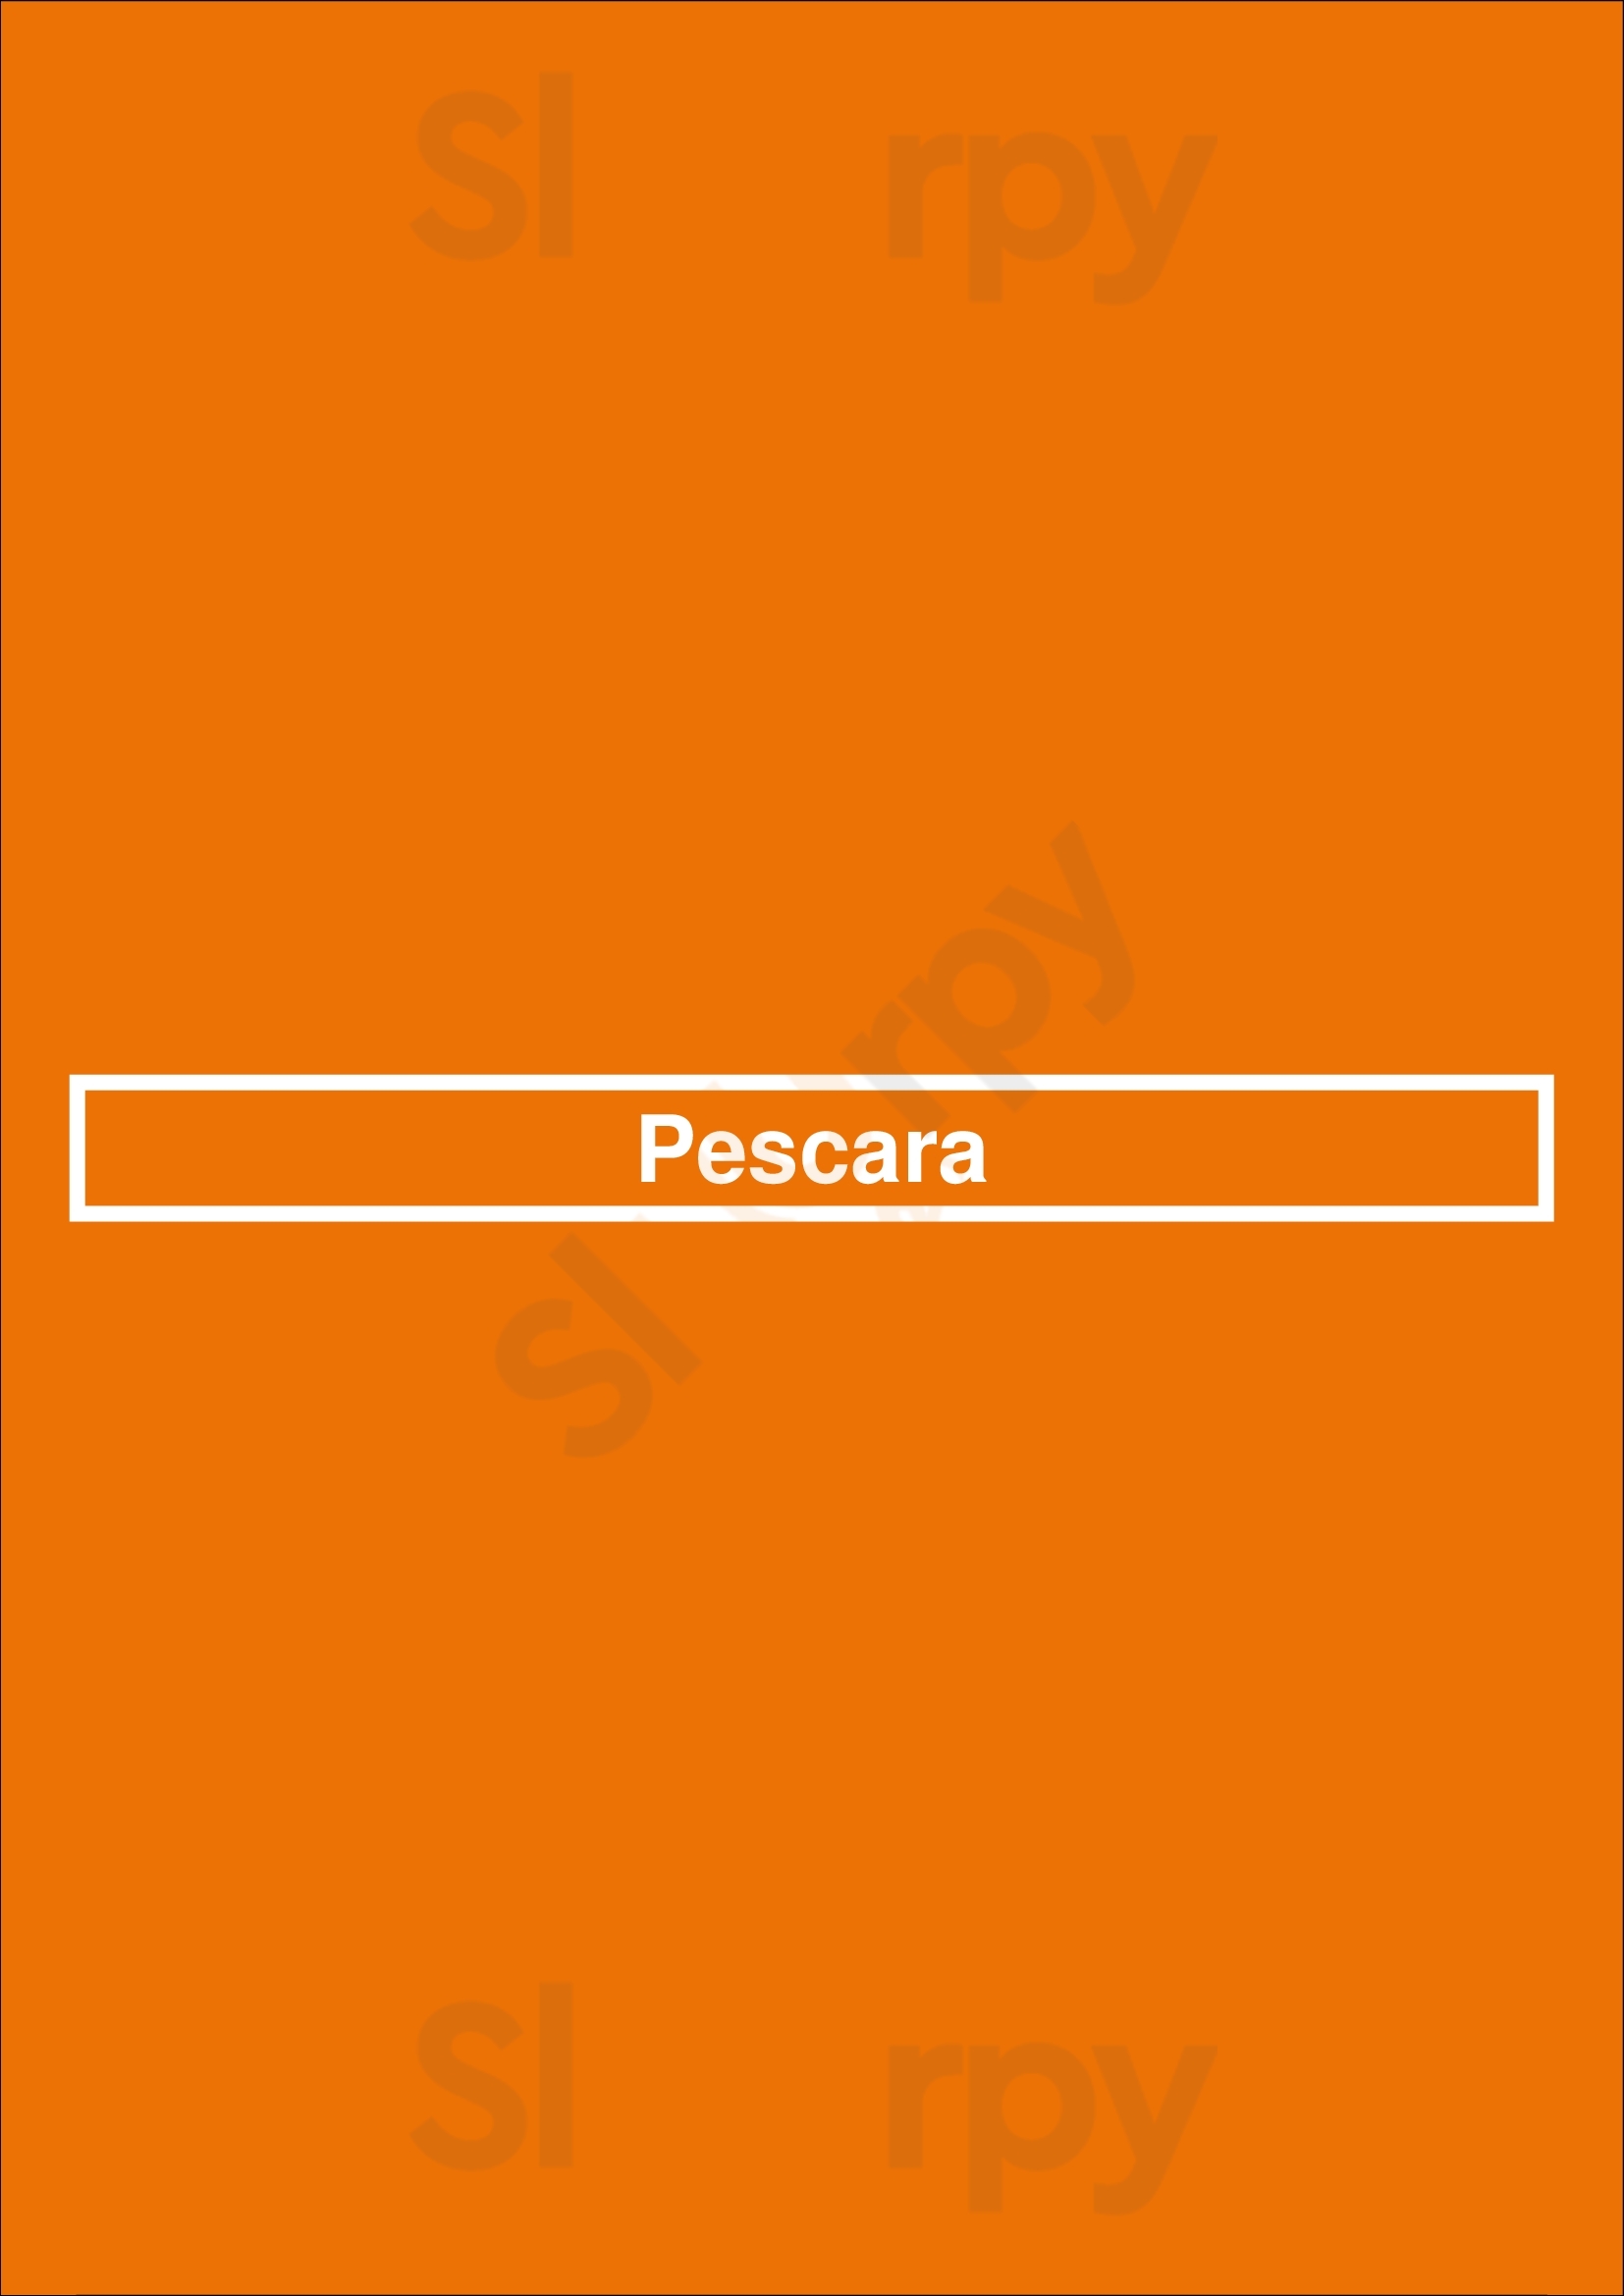 Pescara Rochester Menu - 1